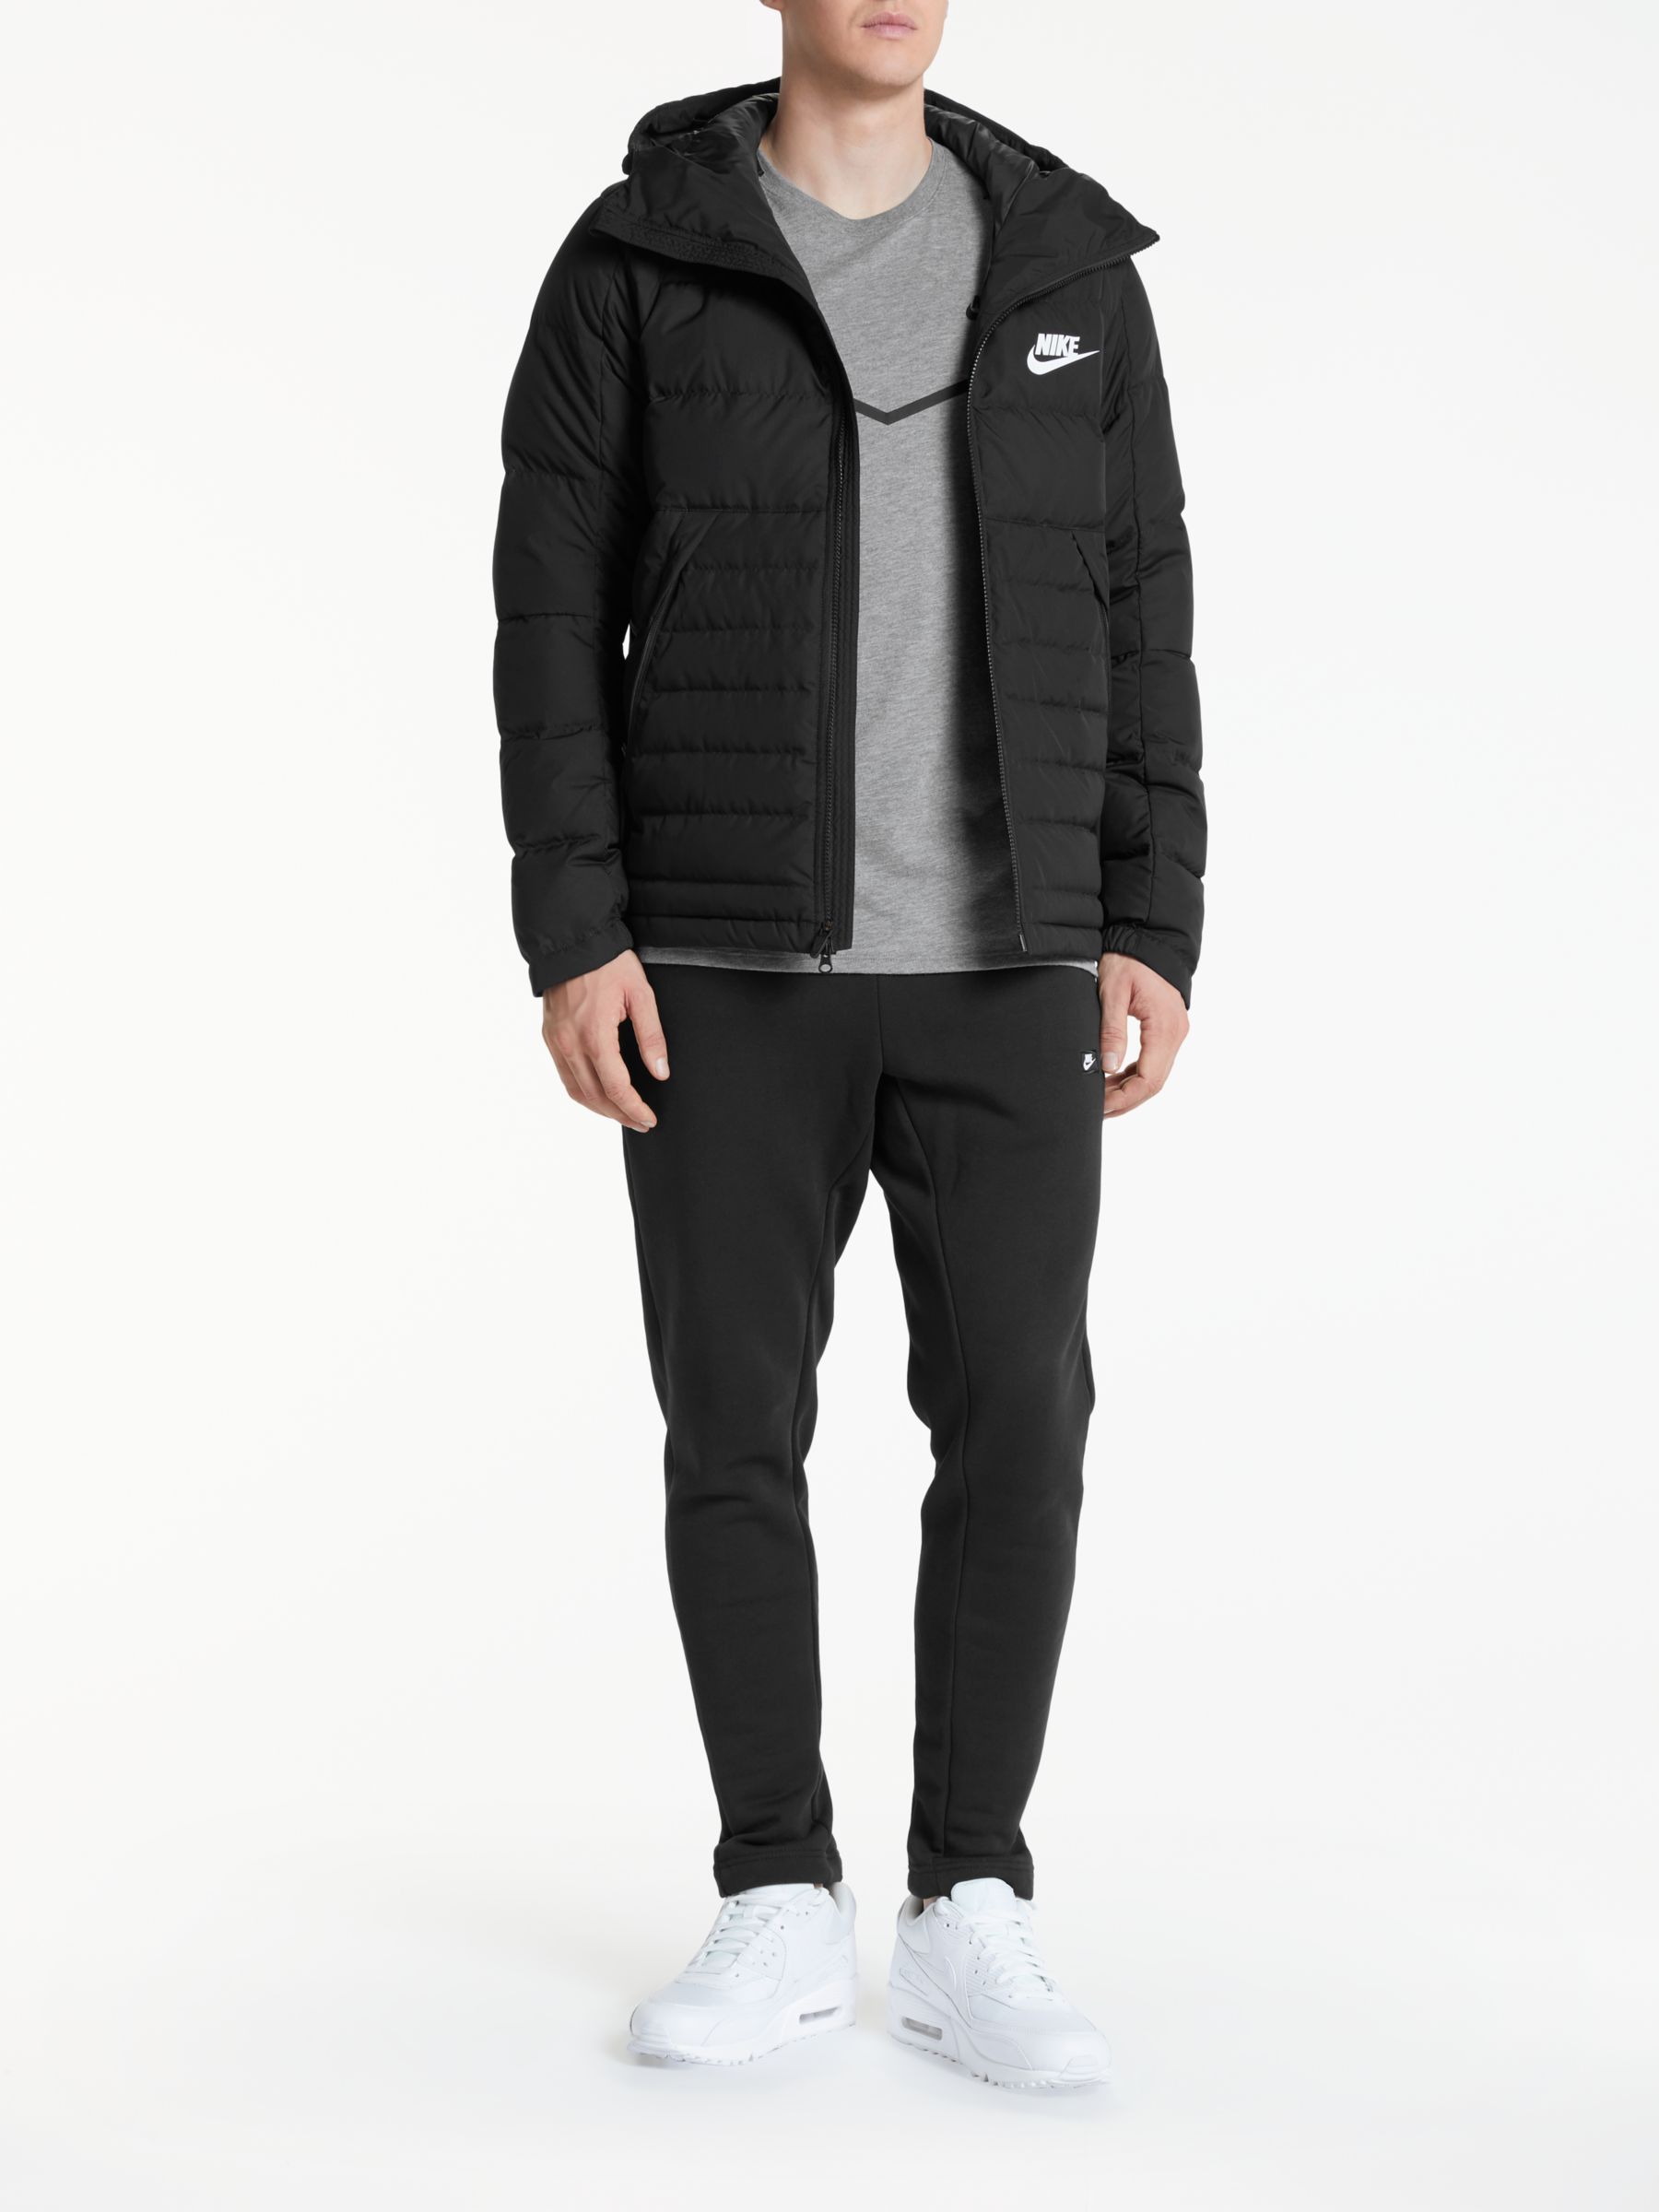 Nike Sportswear Down Insulated Jacket, Black